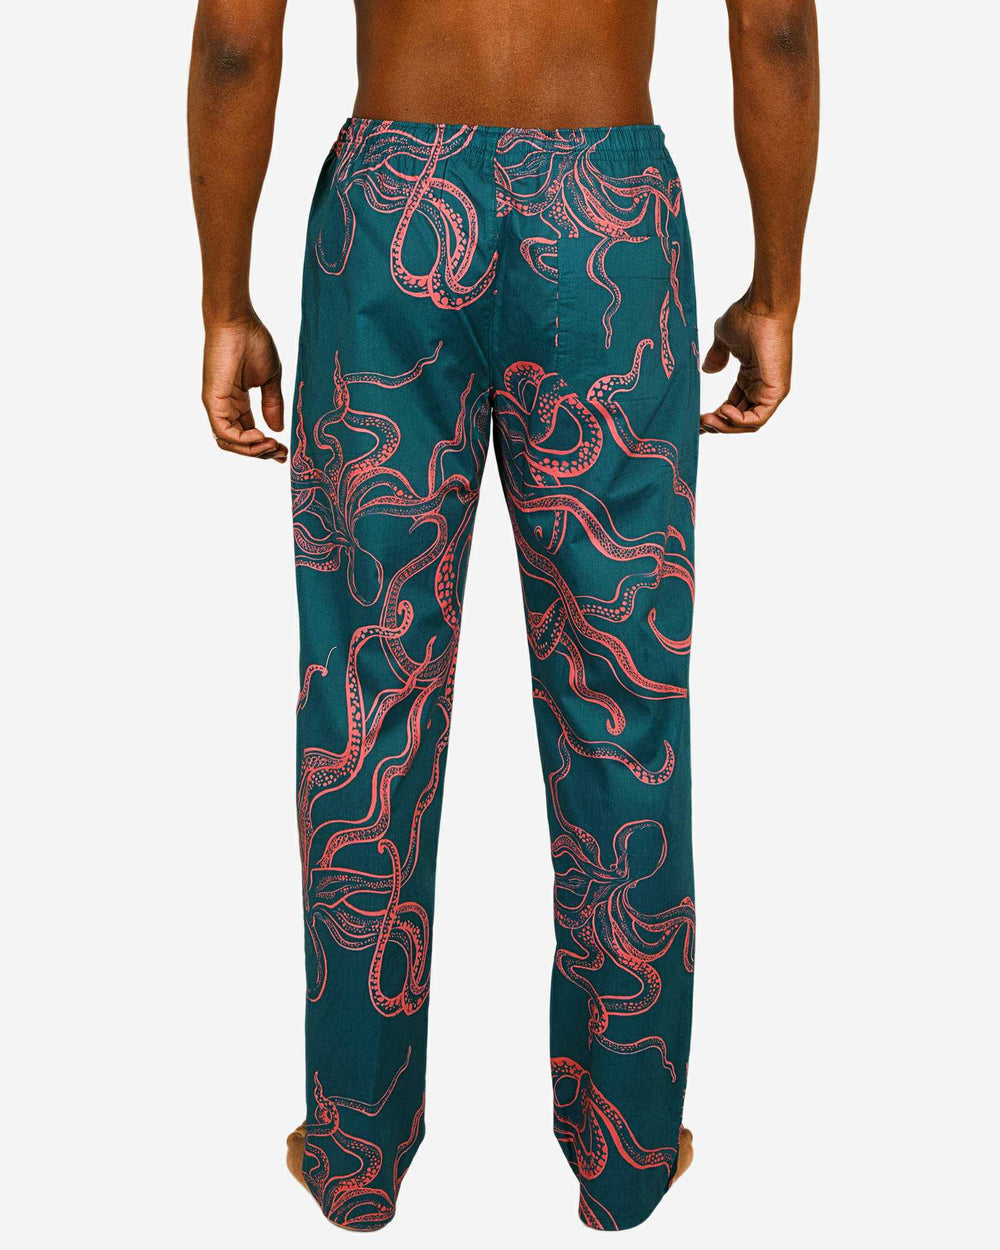 Mens Pyjama Bottoms - pink octopuses on a dark green background